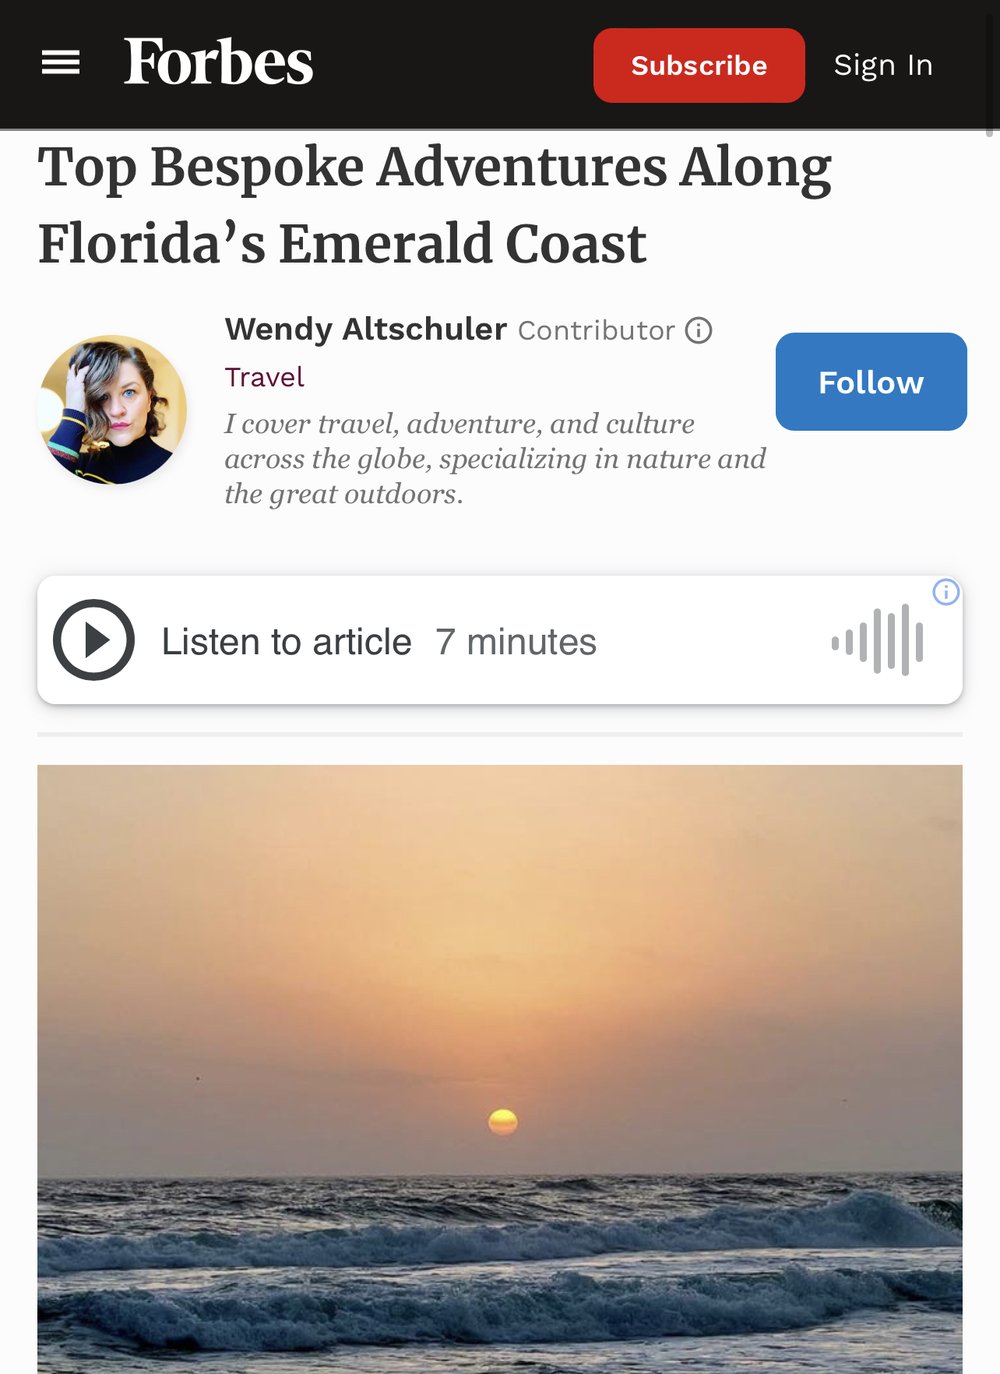 Top Bespoke Adventures Along Florida’s Emerald Coast